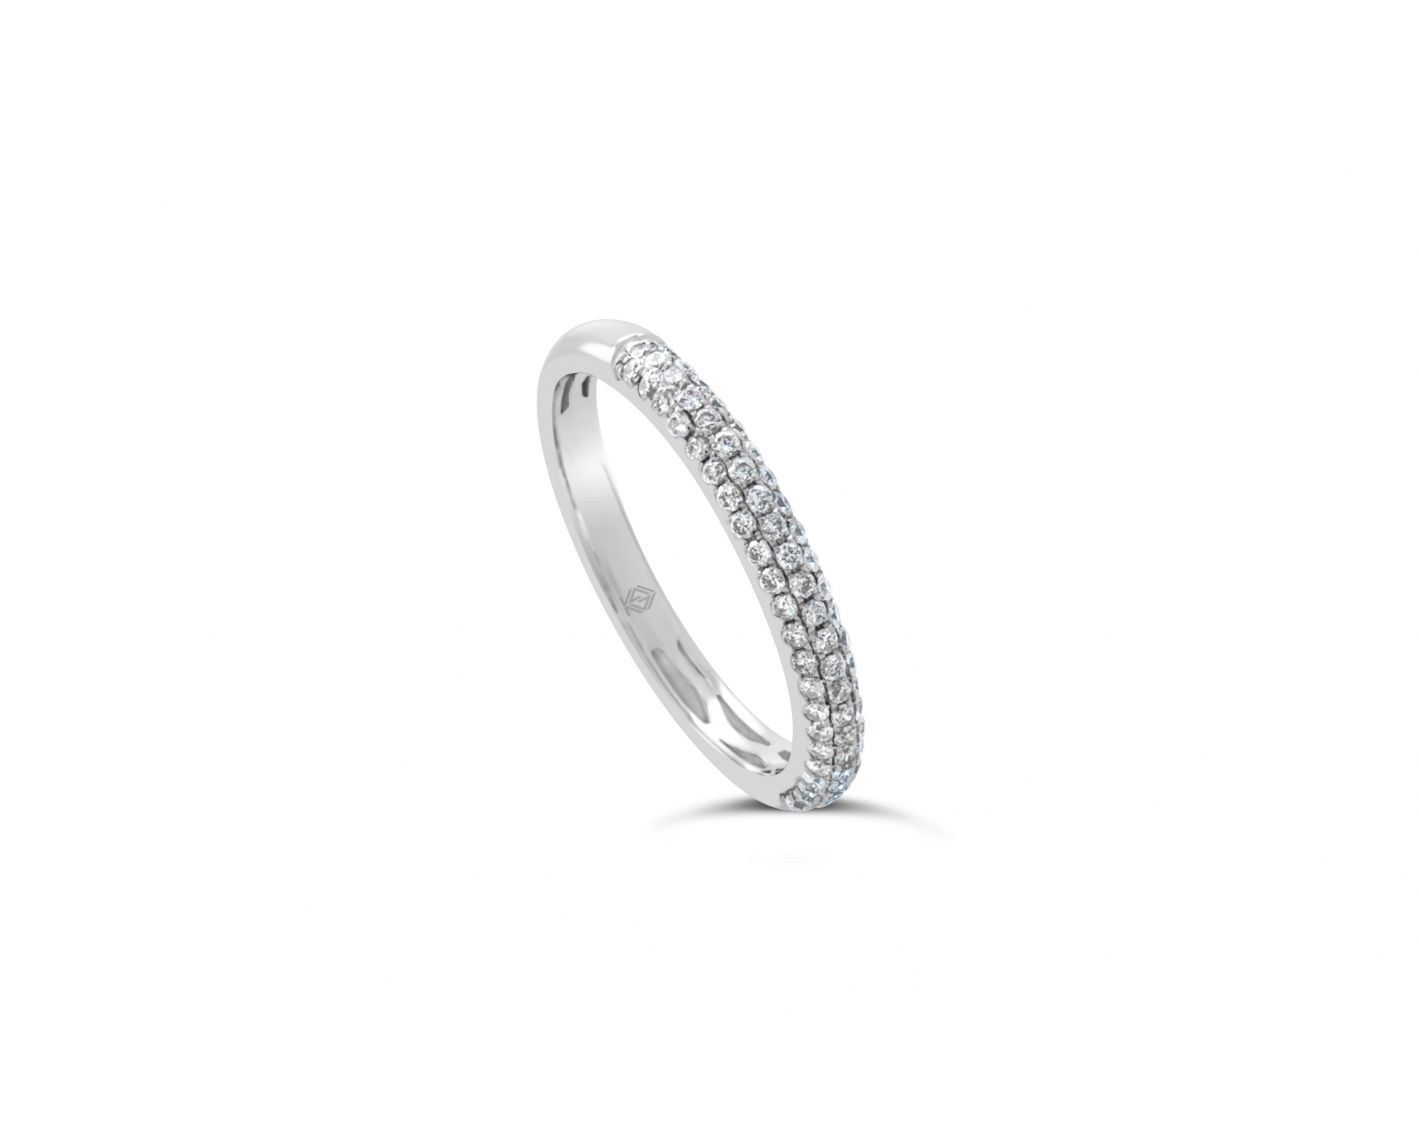 18k white gold 3-row bombay half eternity round shaped diamond wedding ring